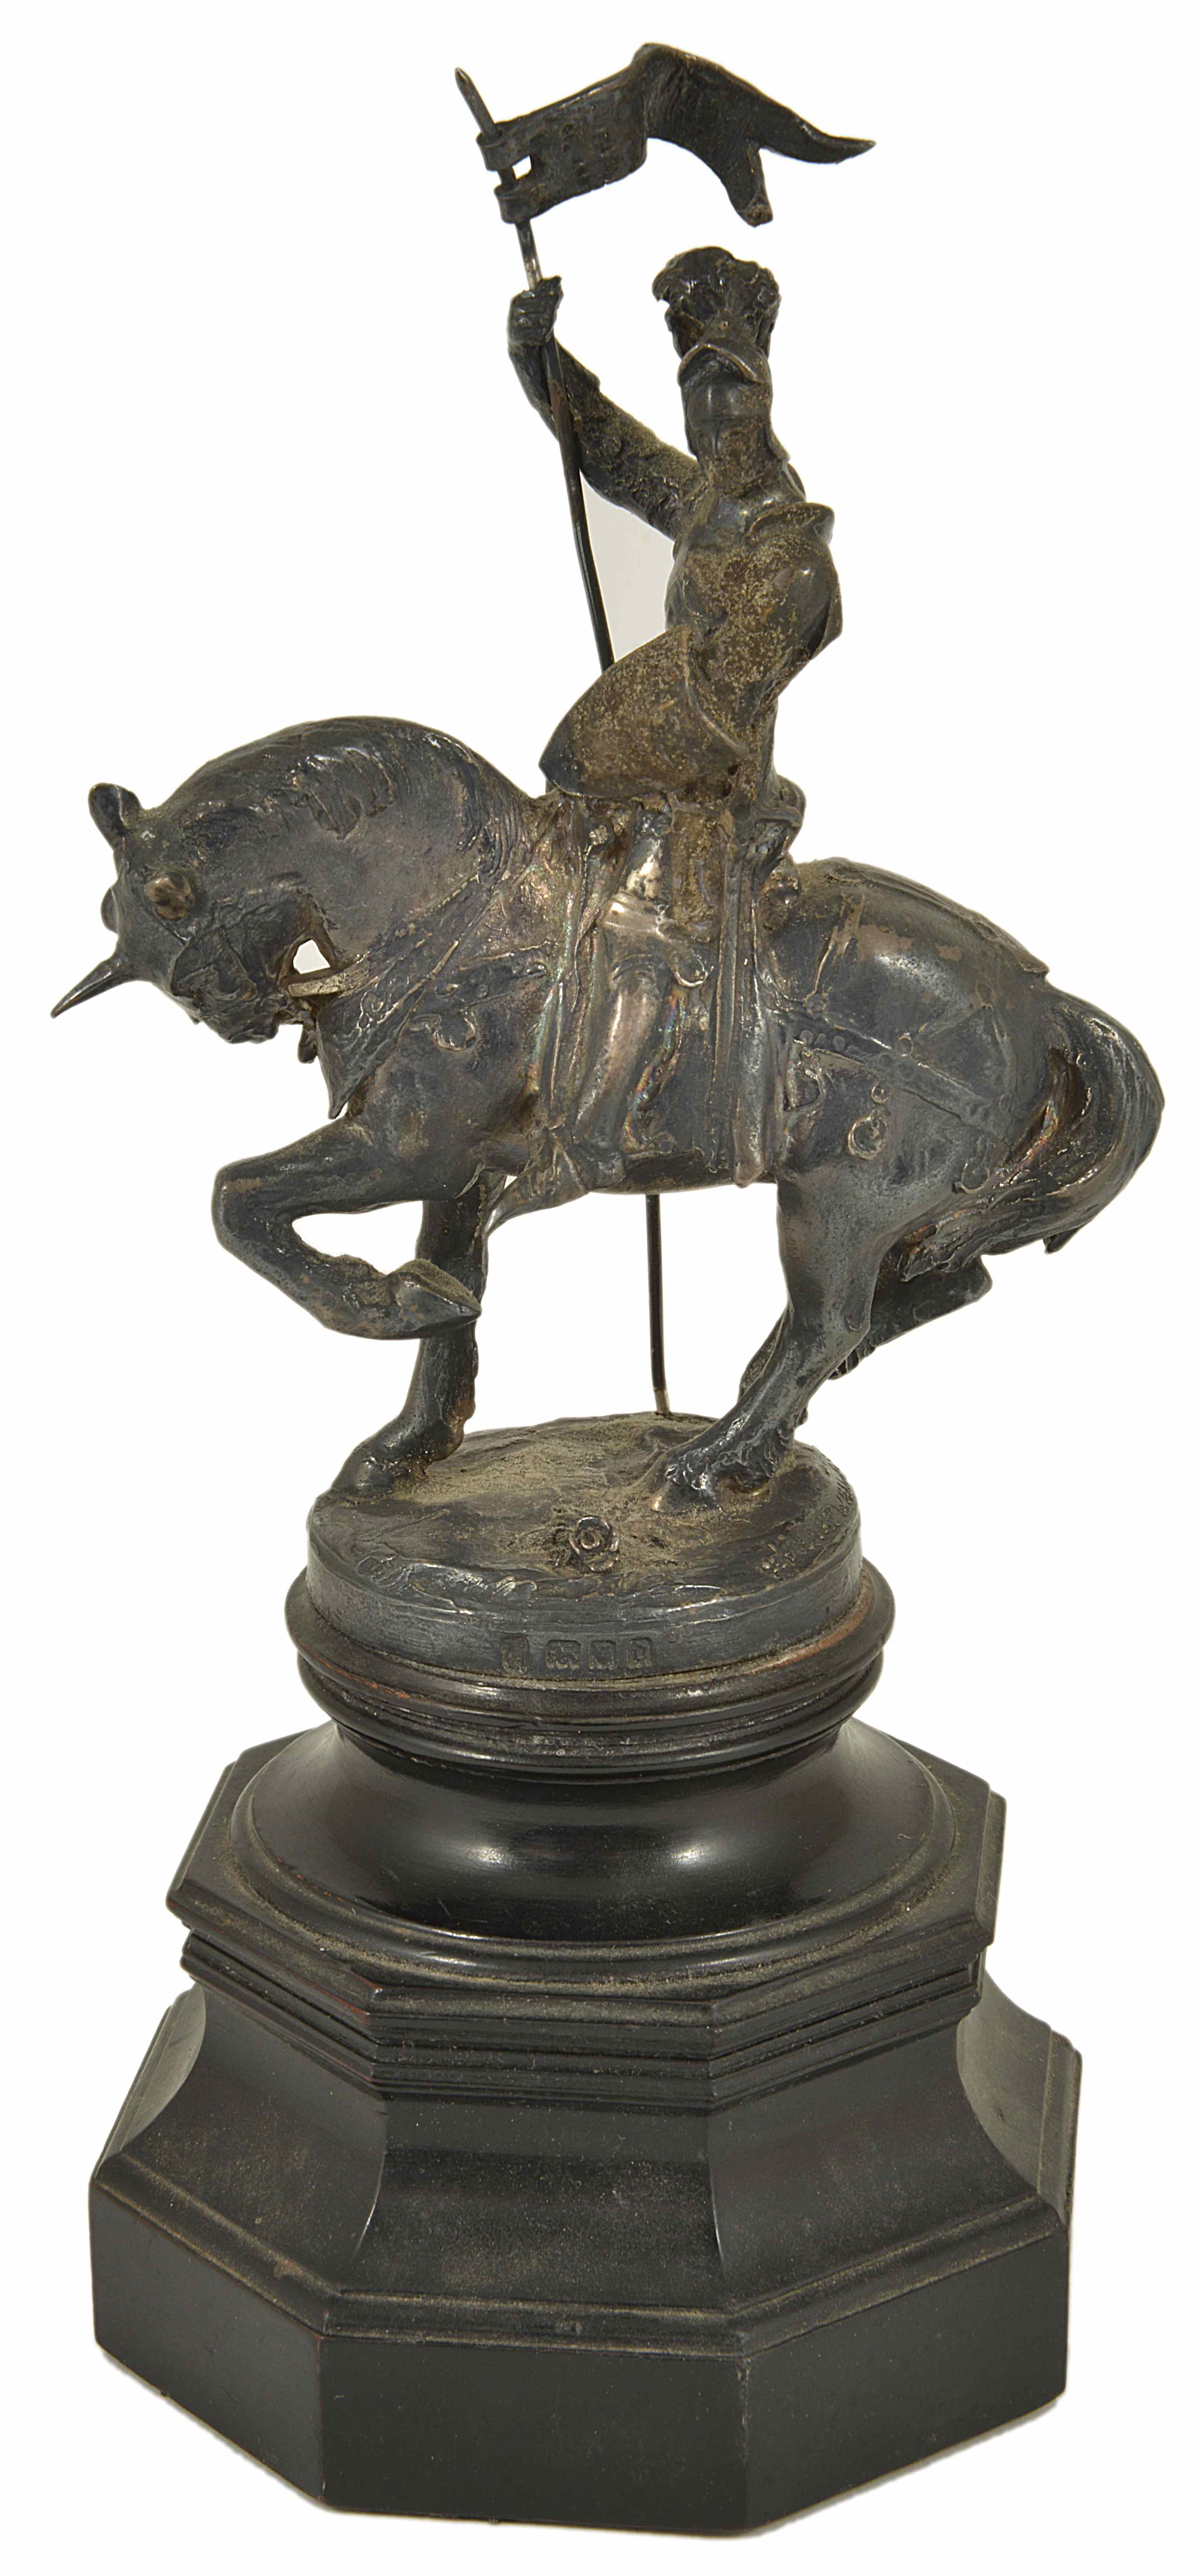 An Edwardian silver Knight on horseback figurine, London 1919 modelled as a knight on horseback